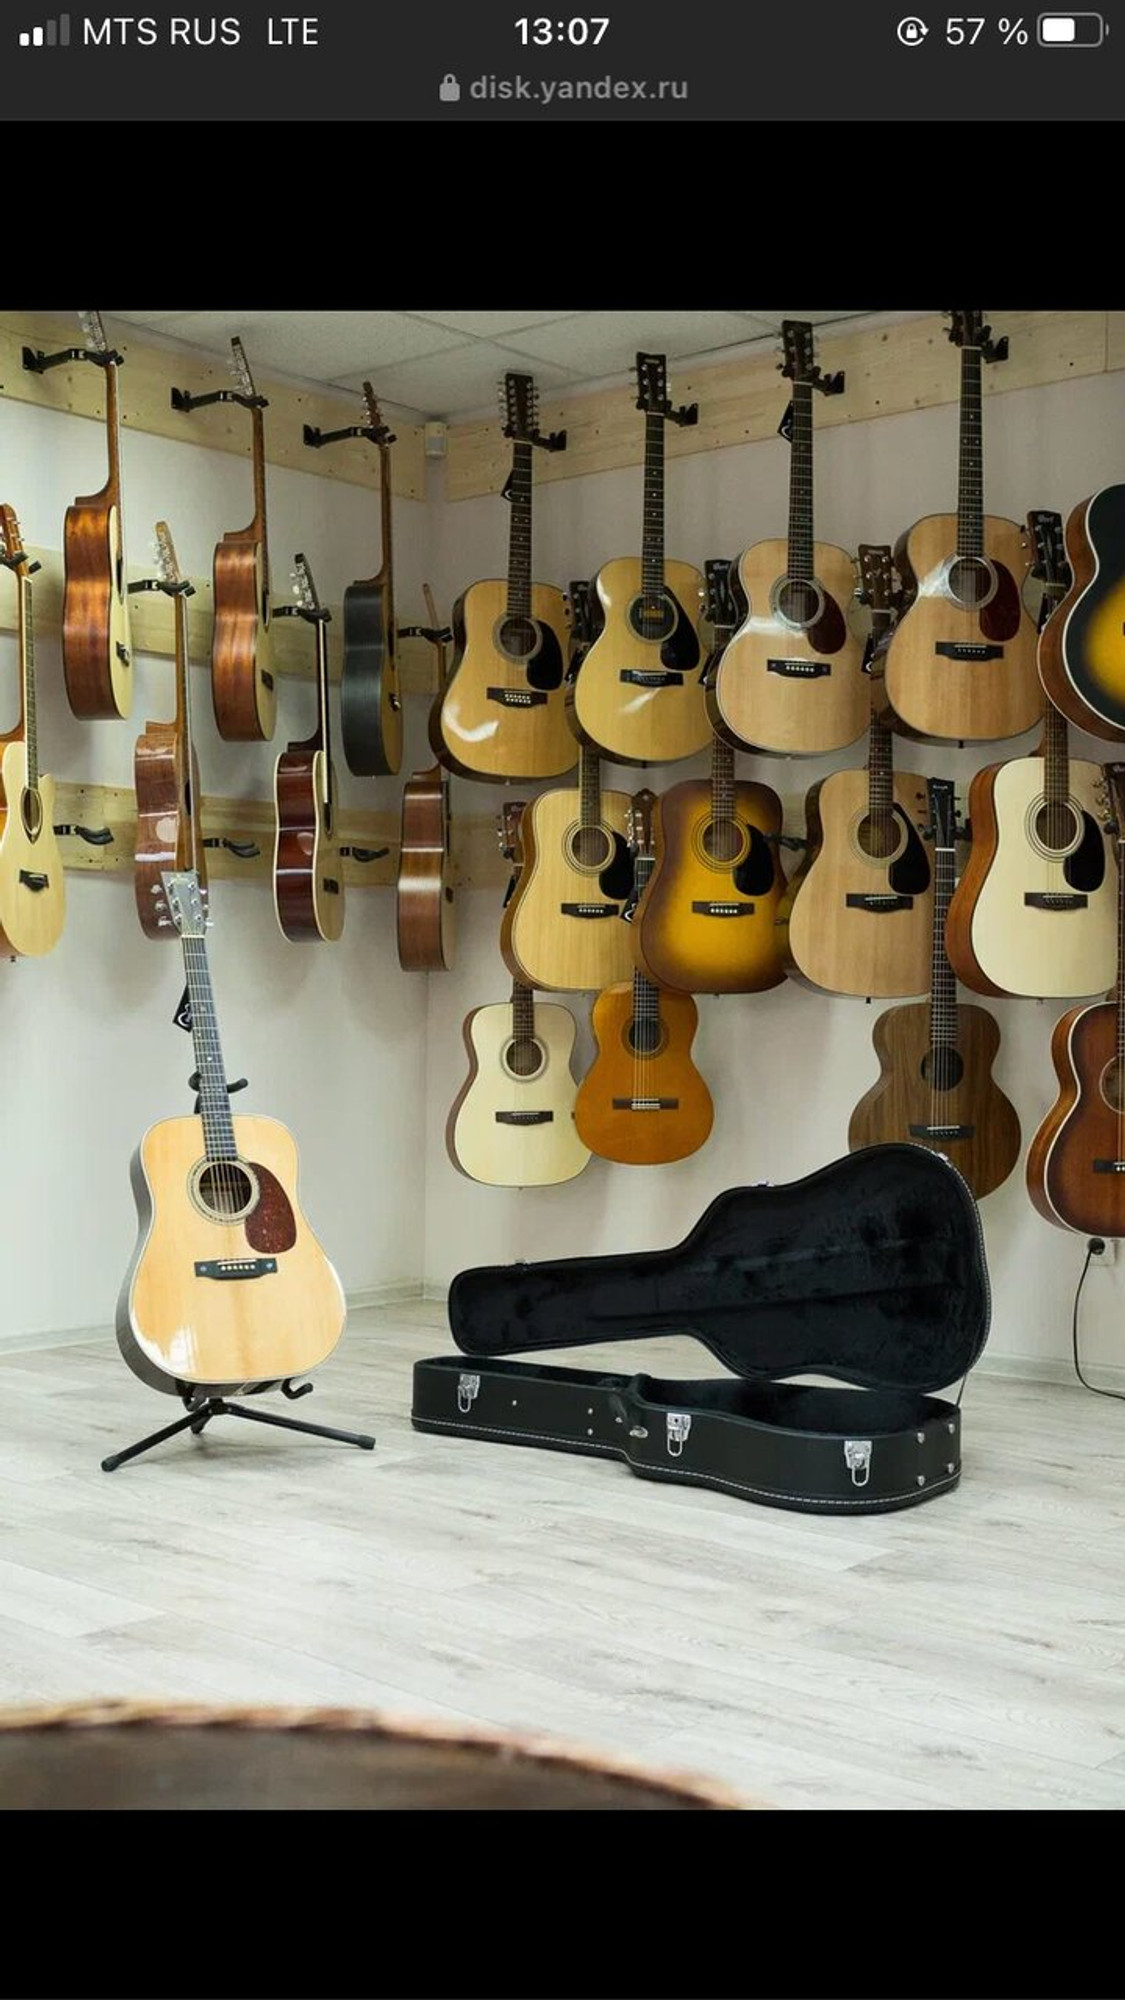 Guitars & Craft (Музыкальный магазин)